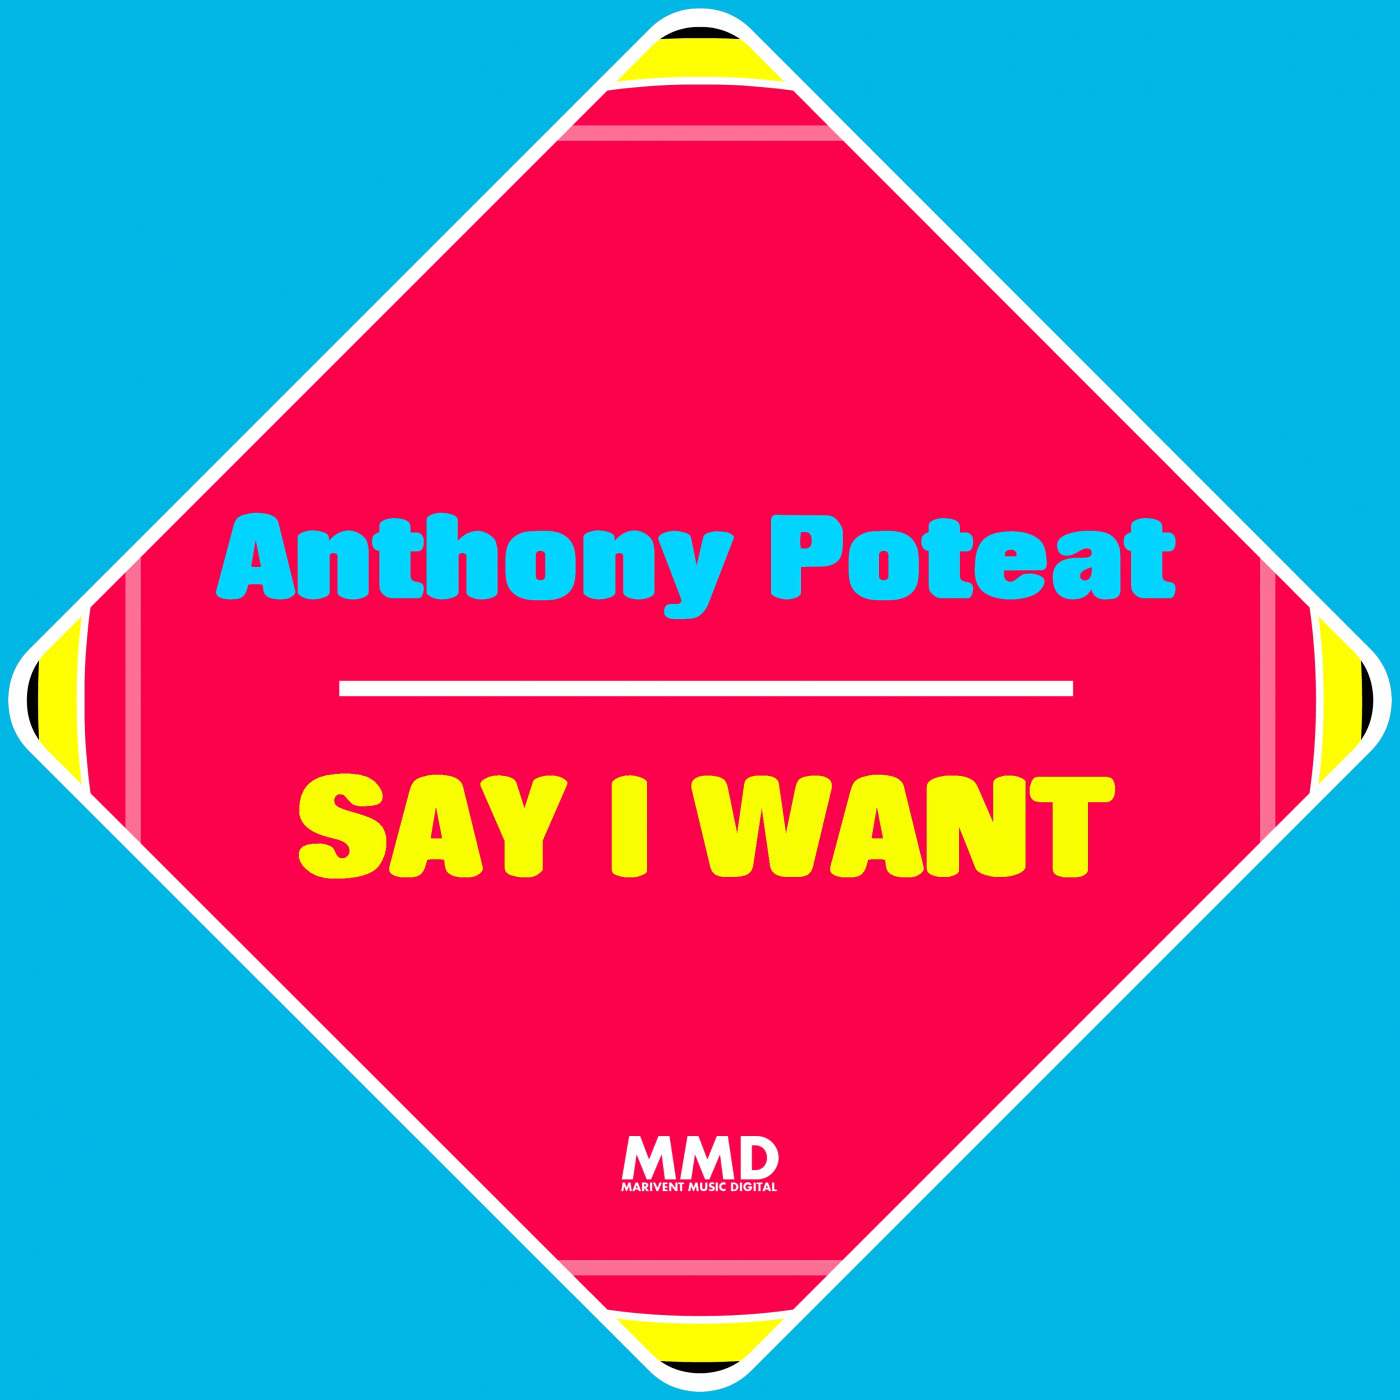 Anthony Poteat - Say I Want / Marivent Music Digital